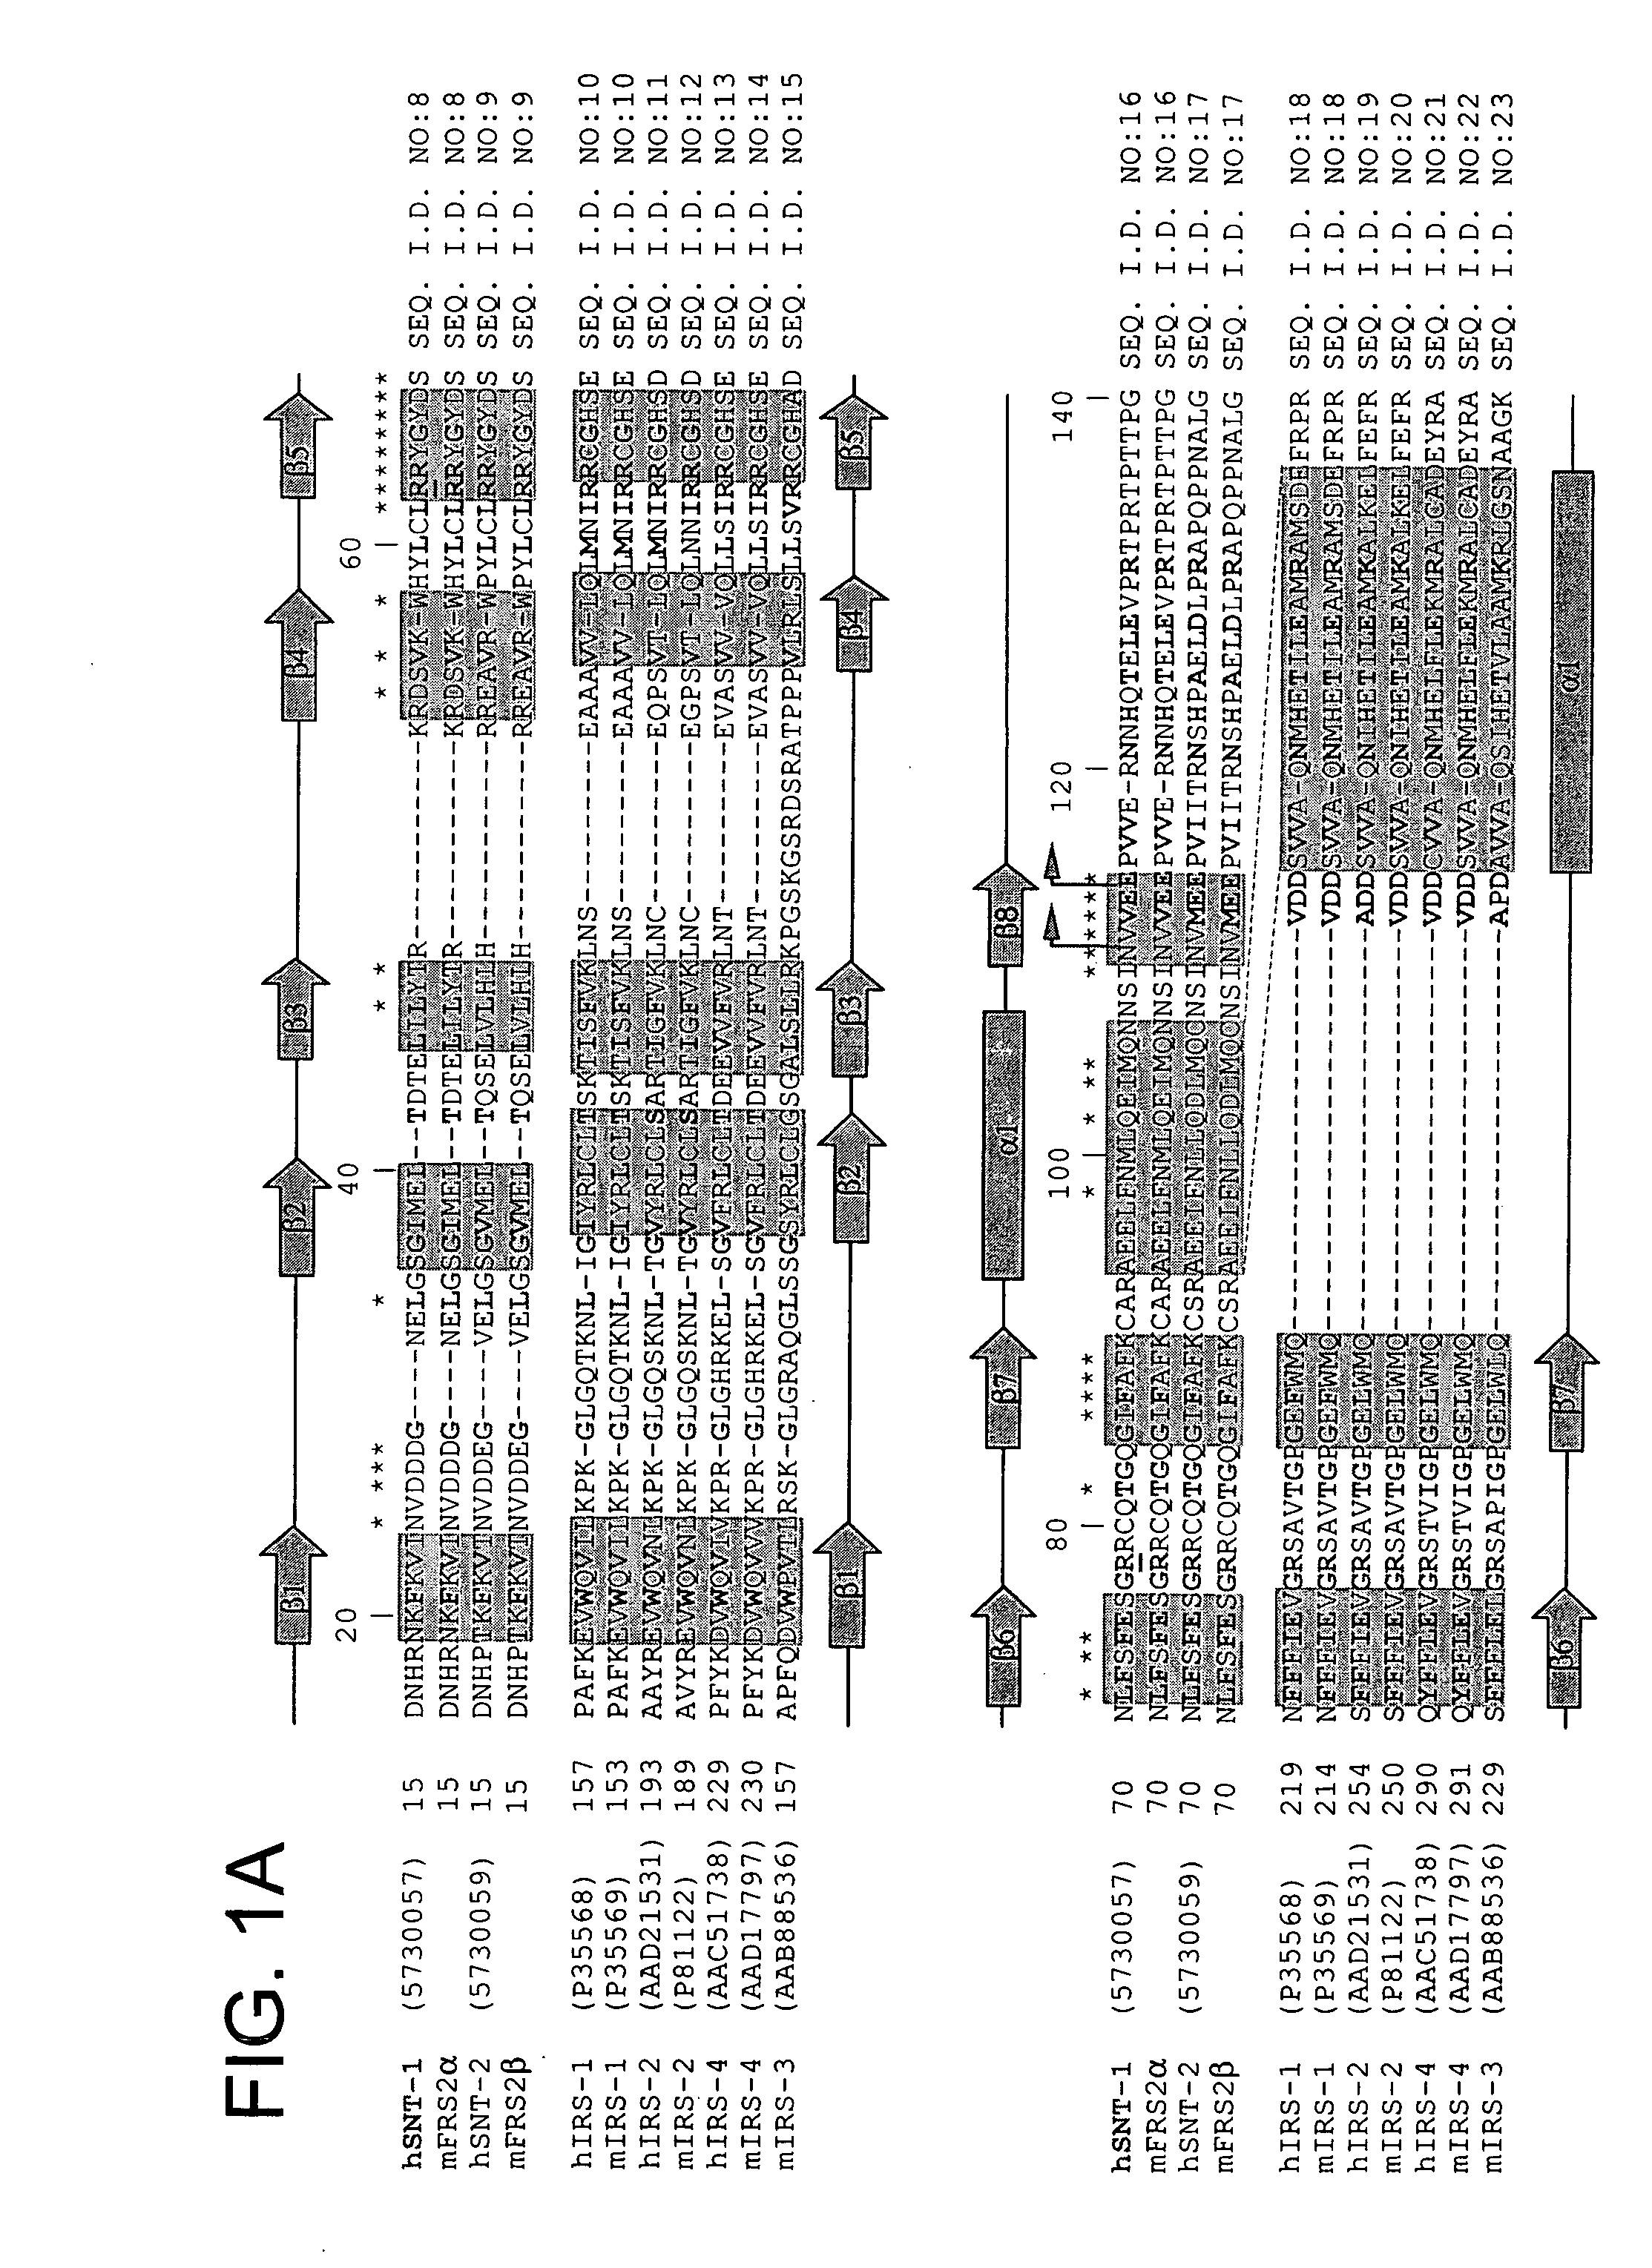 Methods of indentifying modulators of the FGF receptor